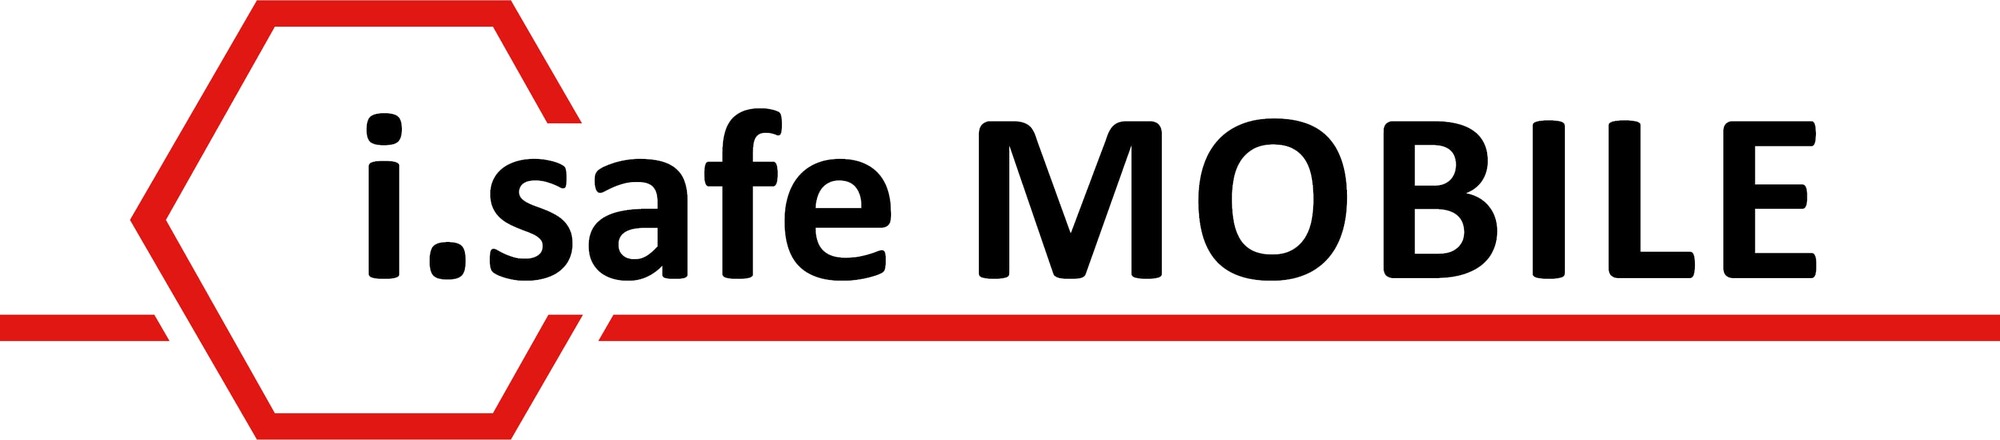 Logo i.safe MOBILE